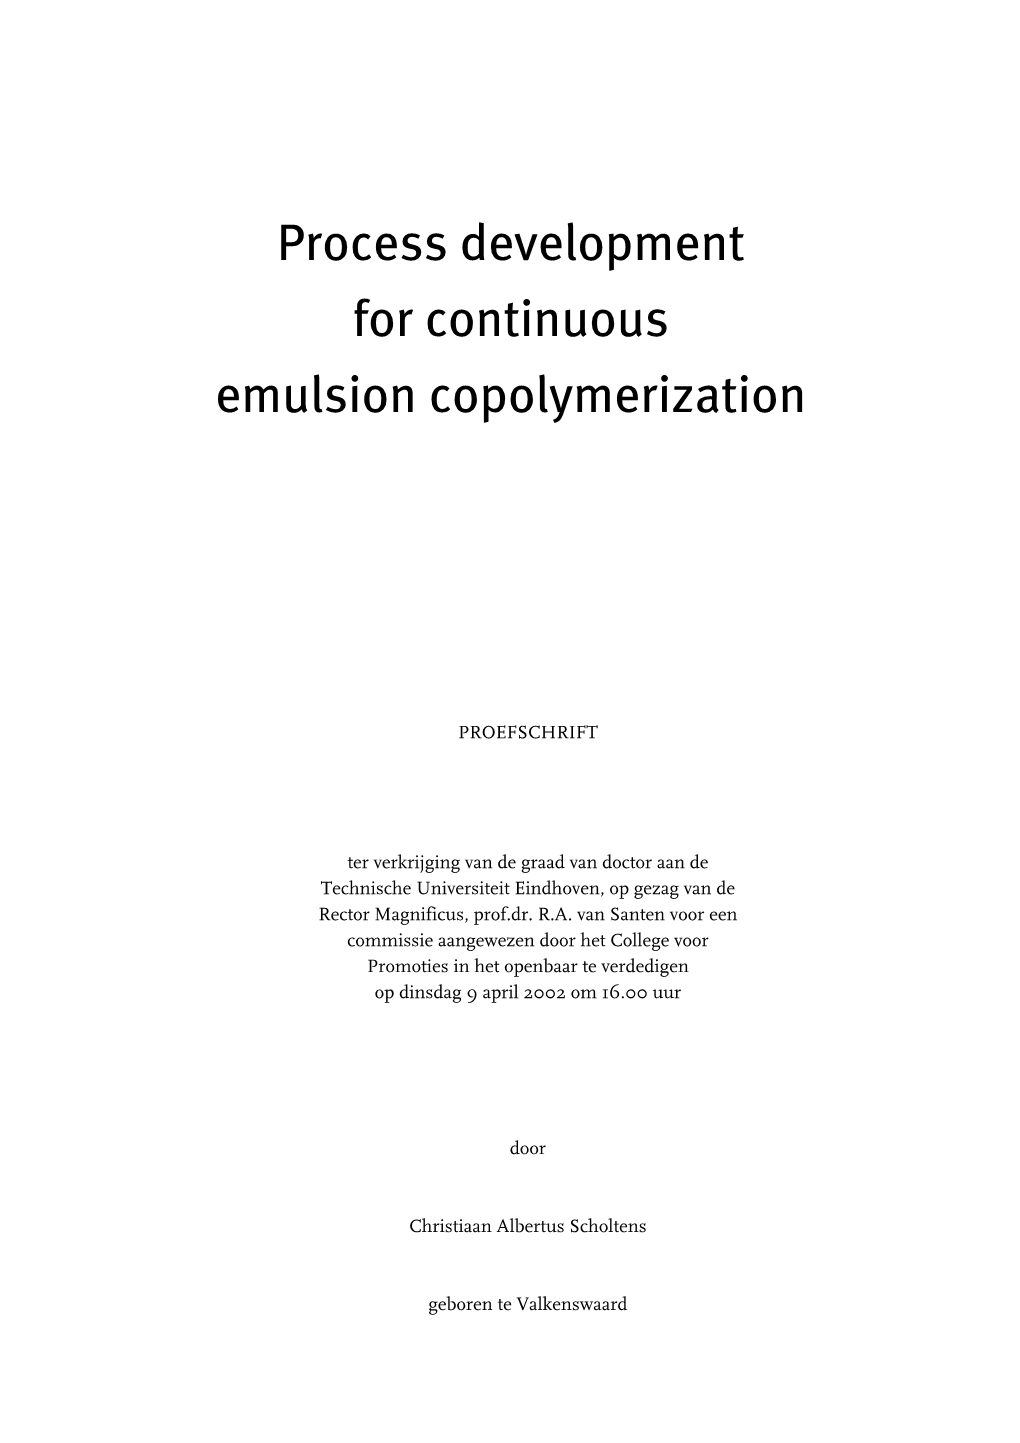 Process Development for Continuous Emulsion Copolymerization